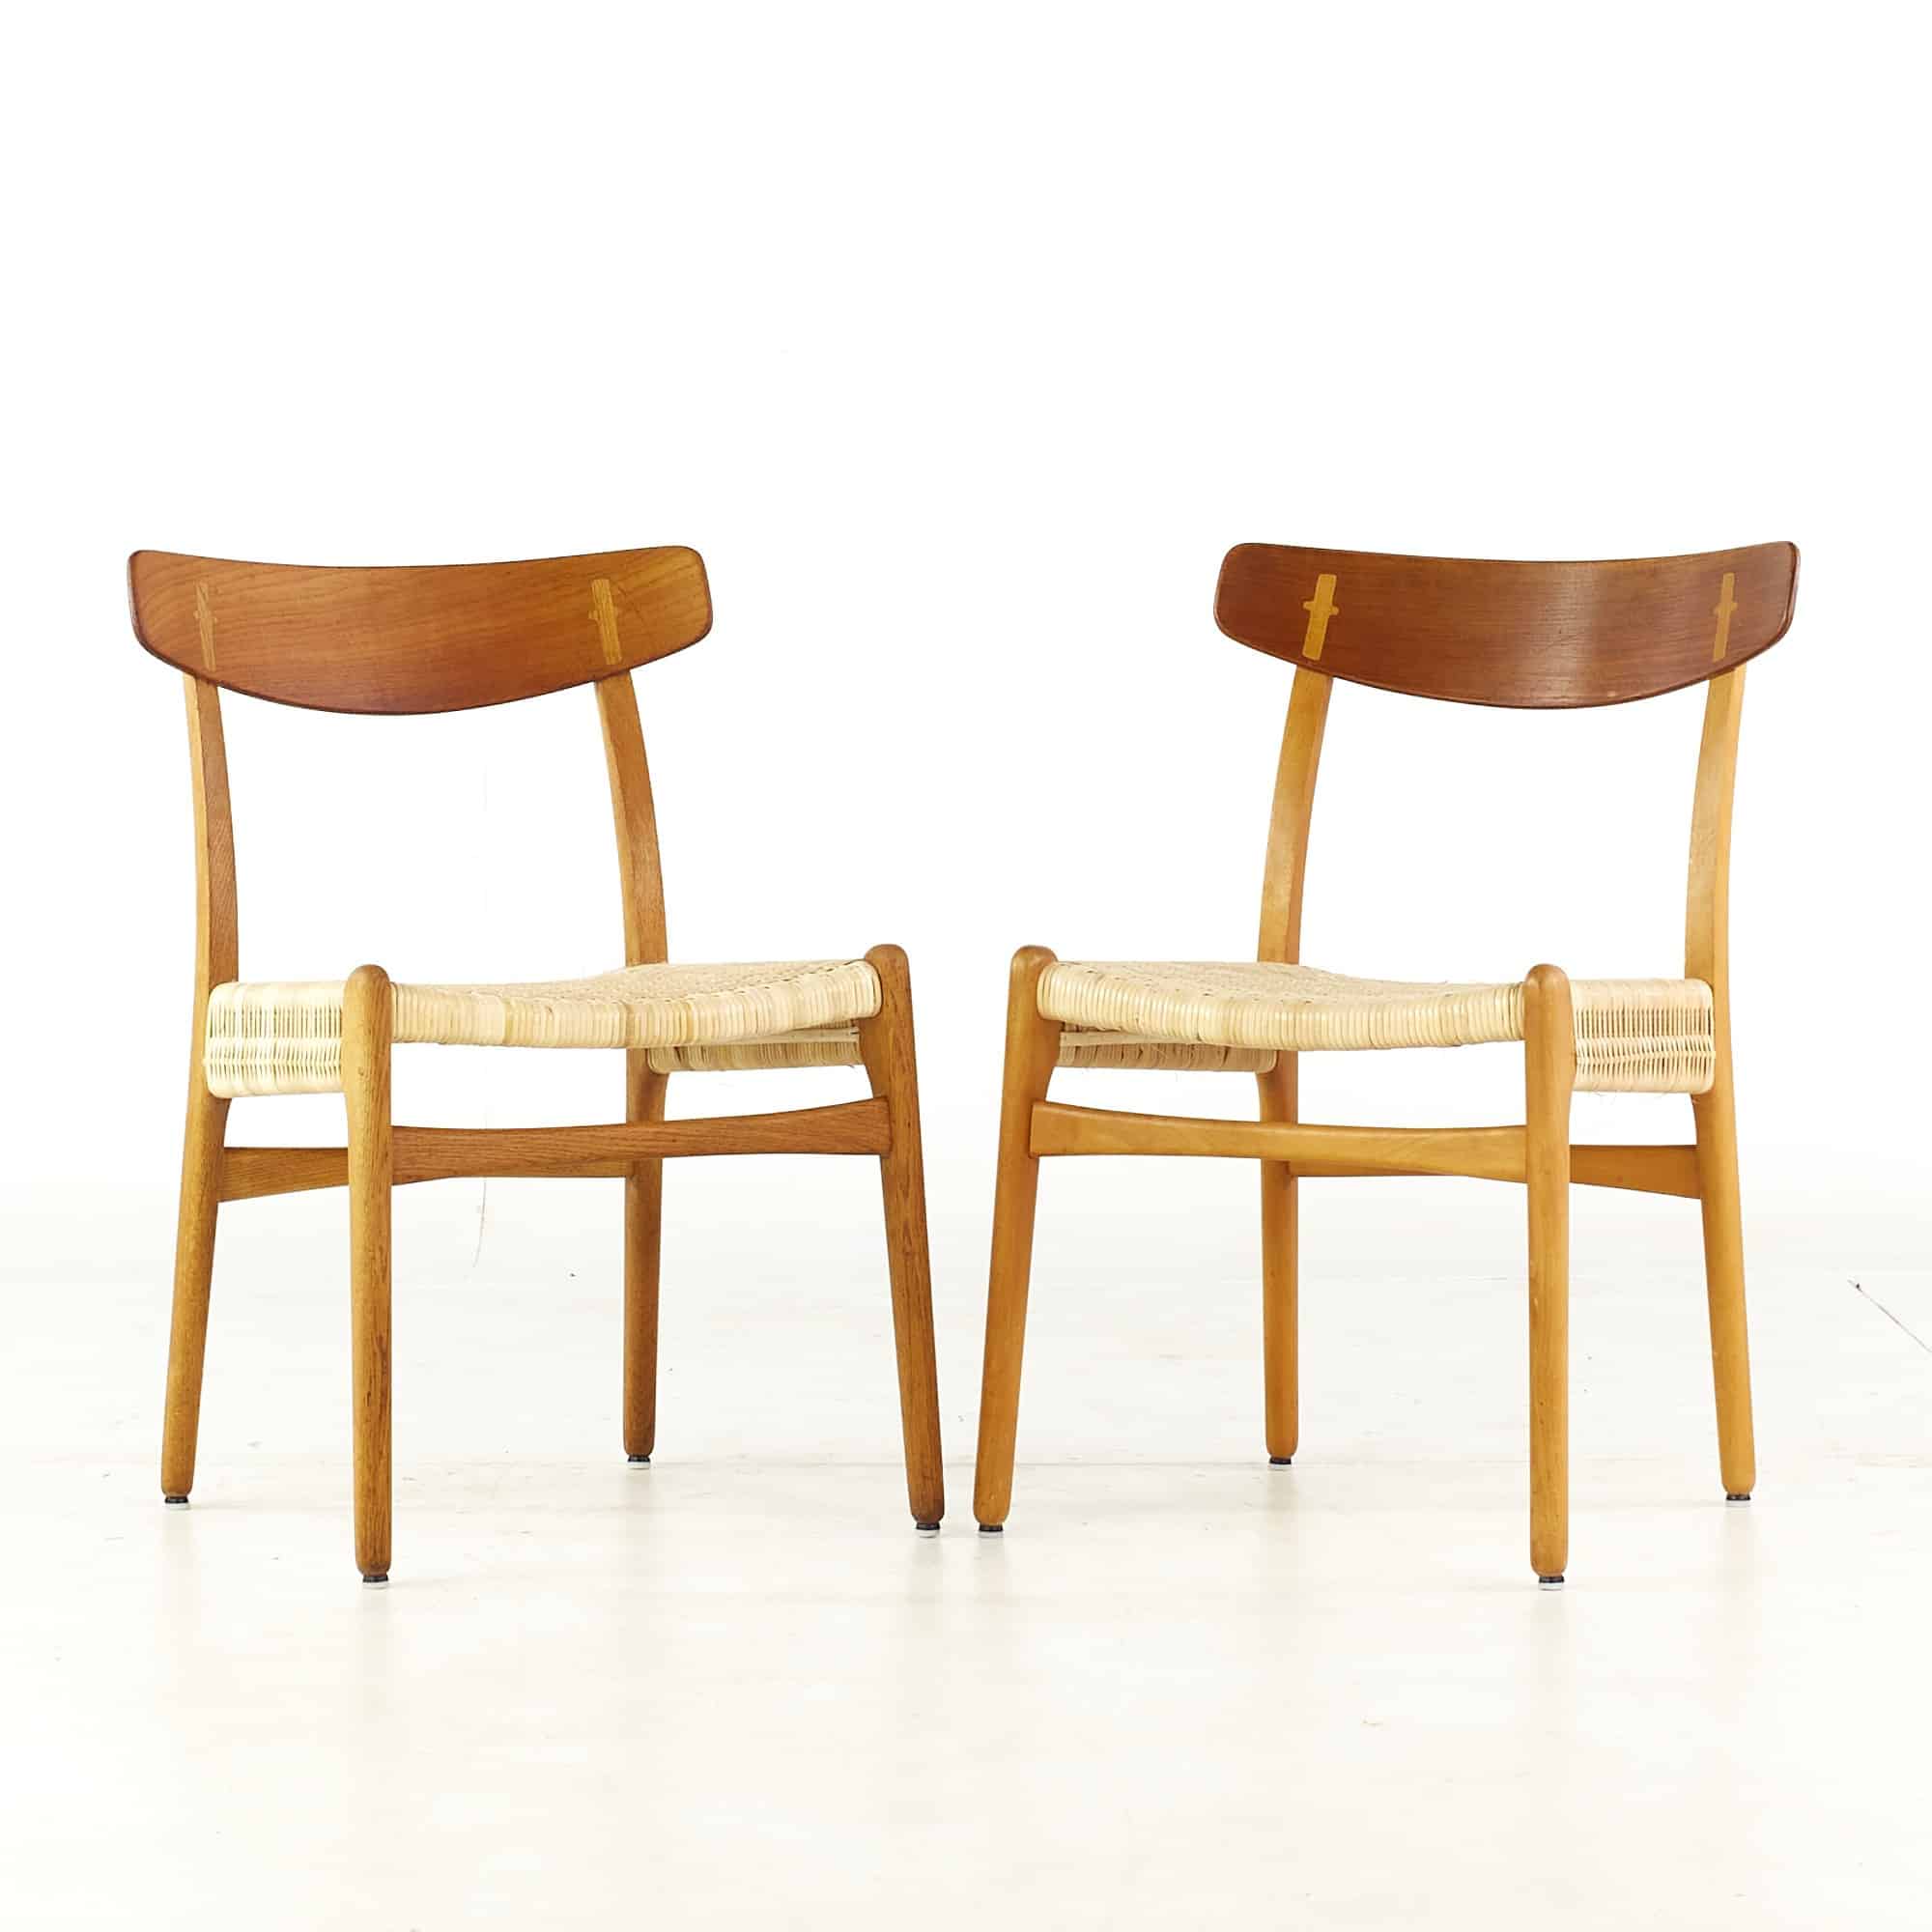 Hans Wegner for Carl Hansen and Son Mid Century Teak Ch23 Dining Chairs - Pair